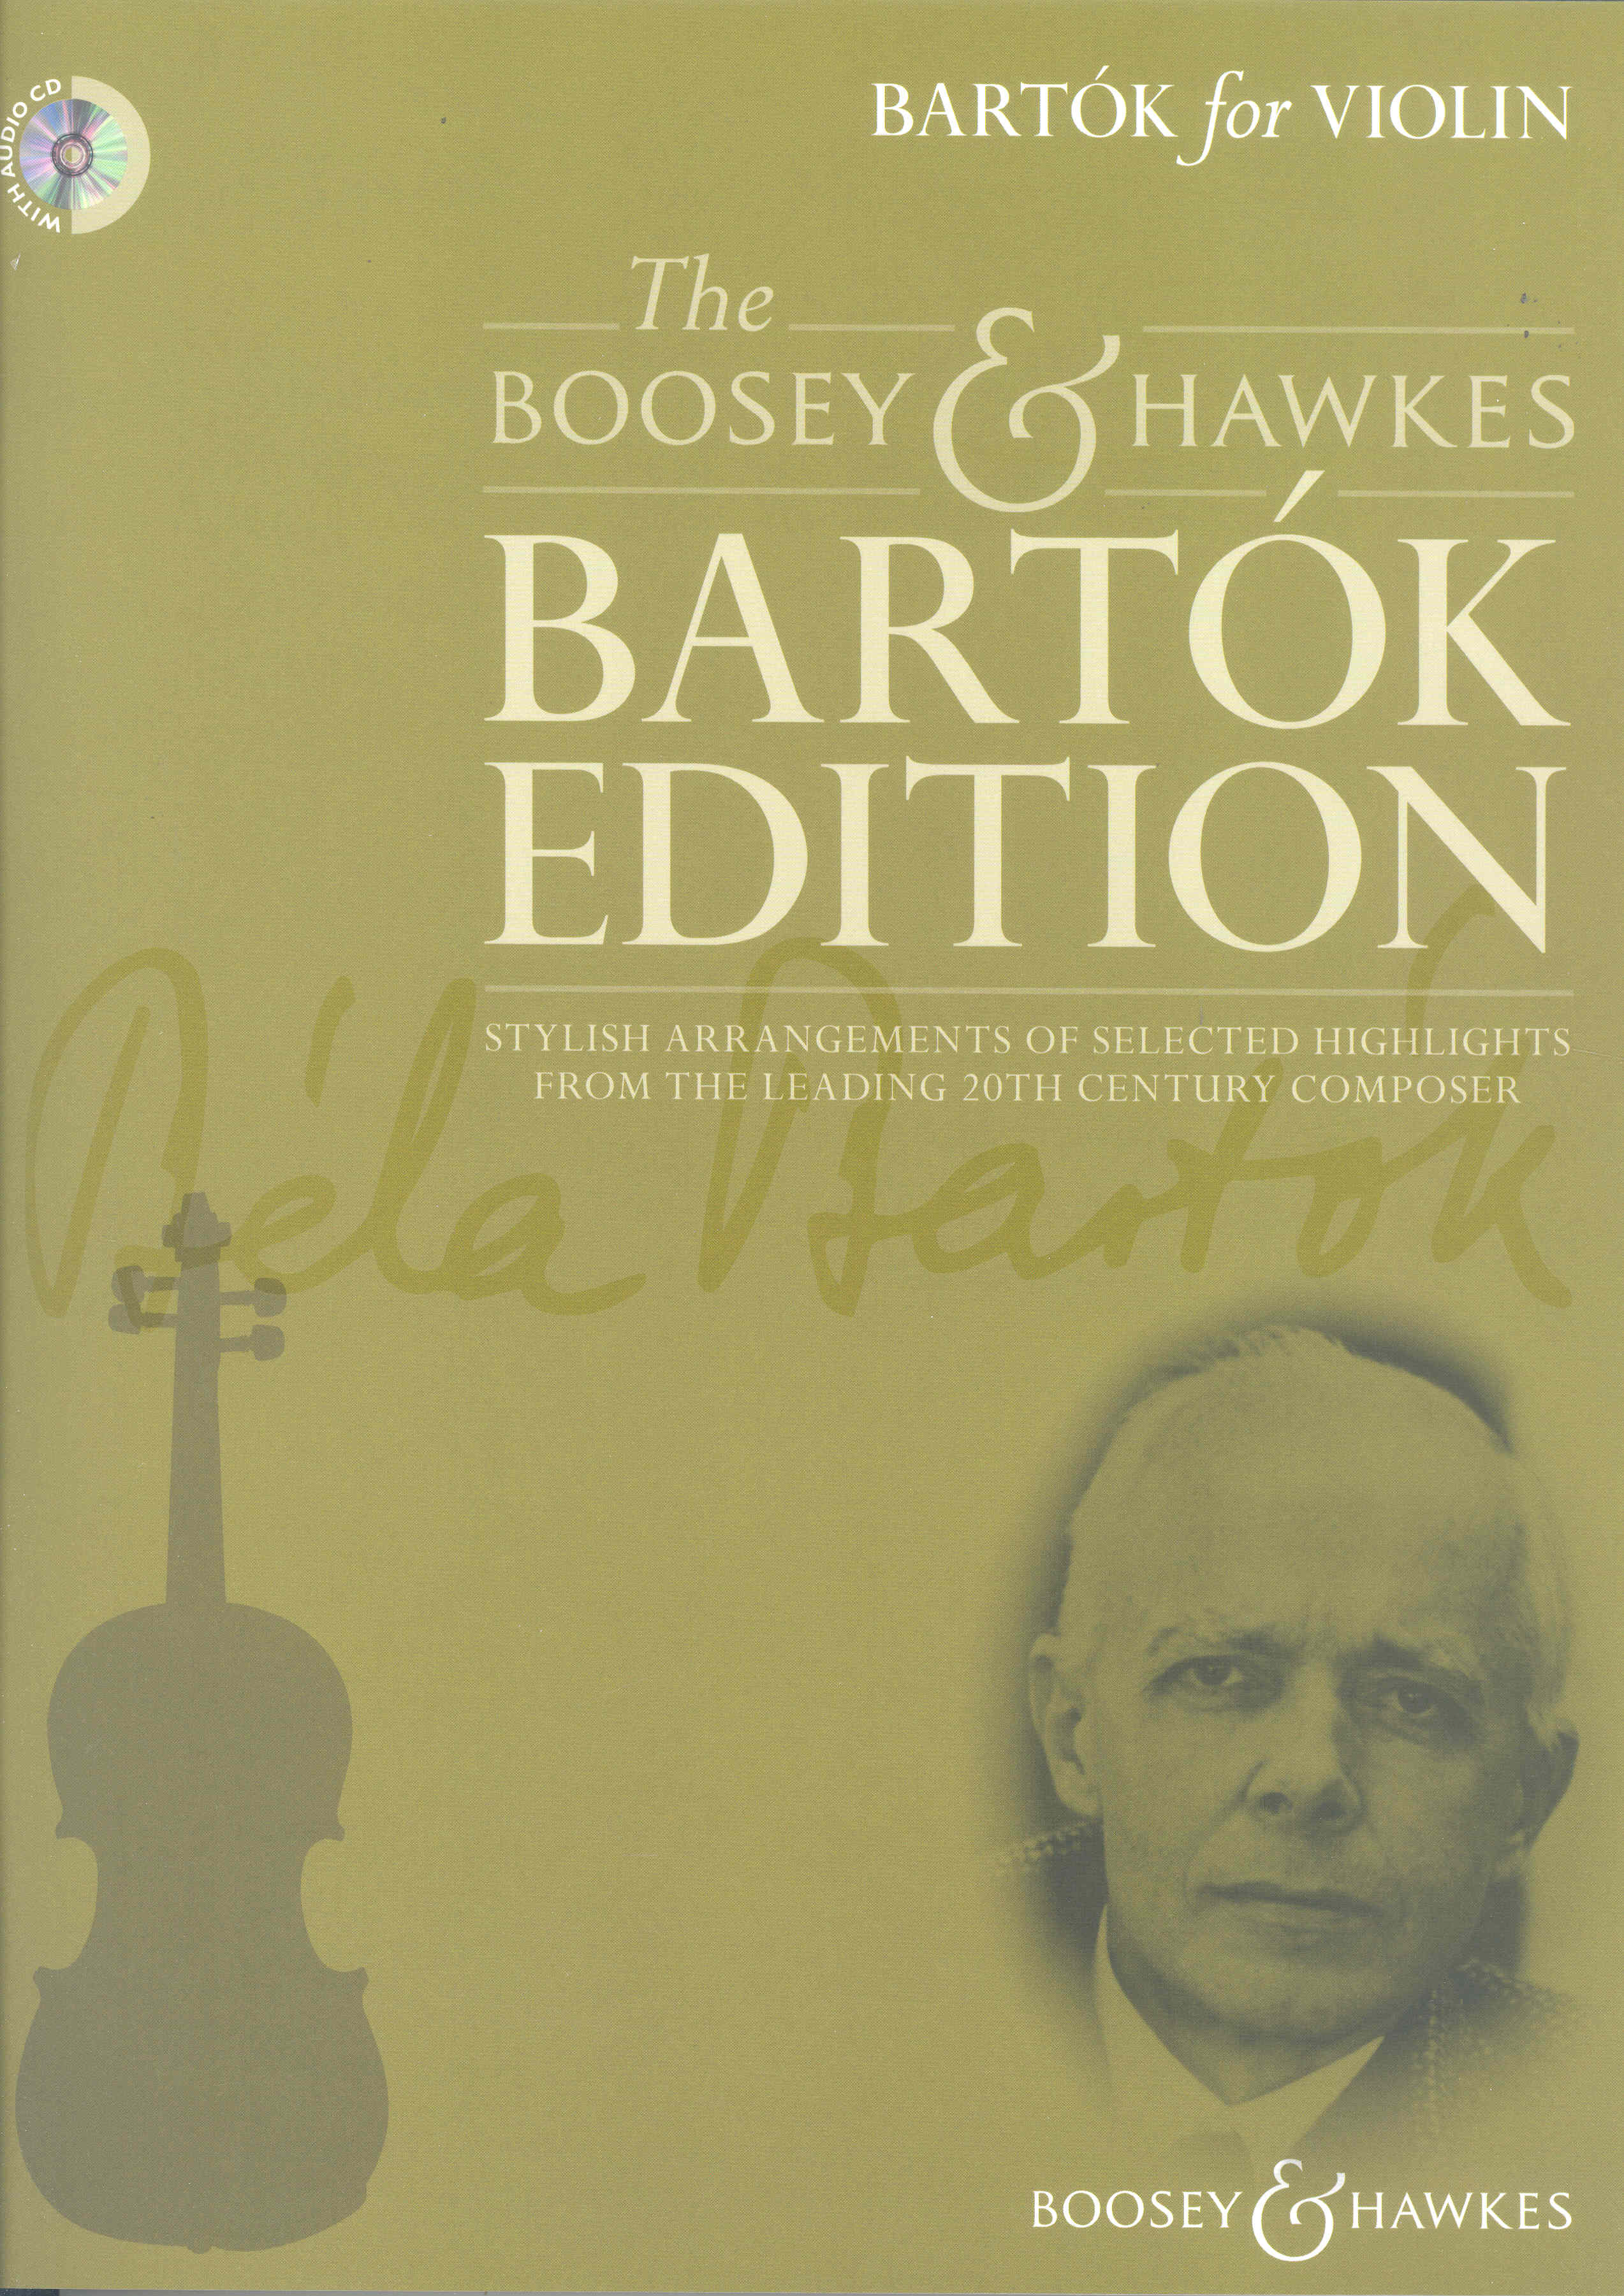 BARTOK FOR VIOLIN + CD Bartok Edition